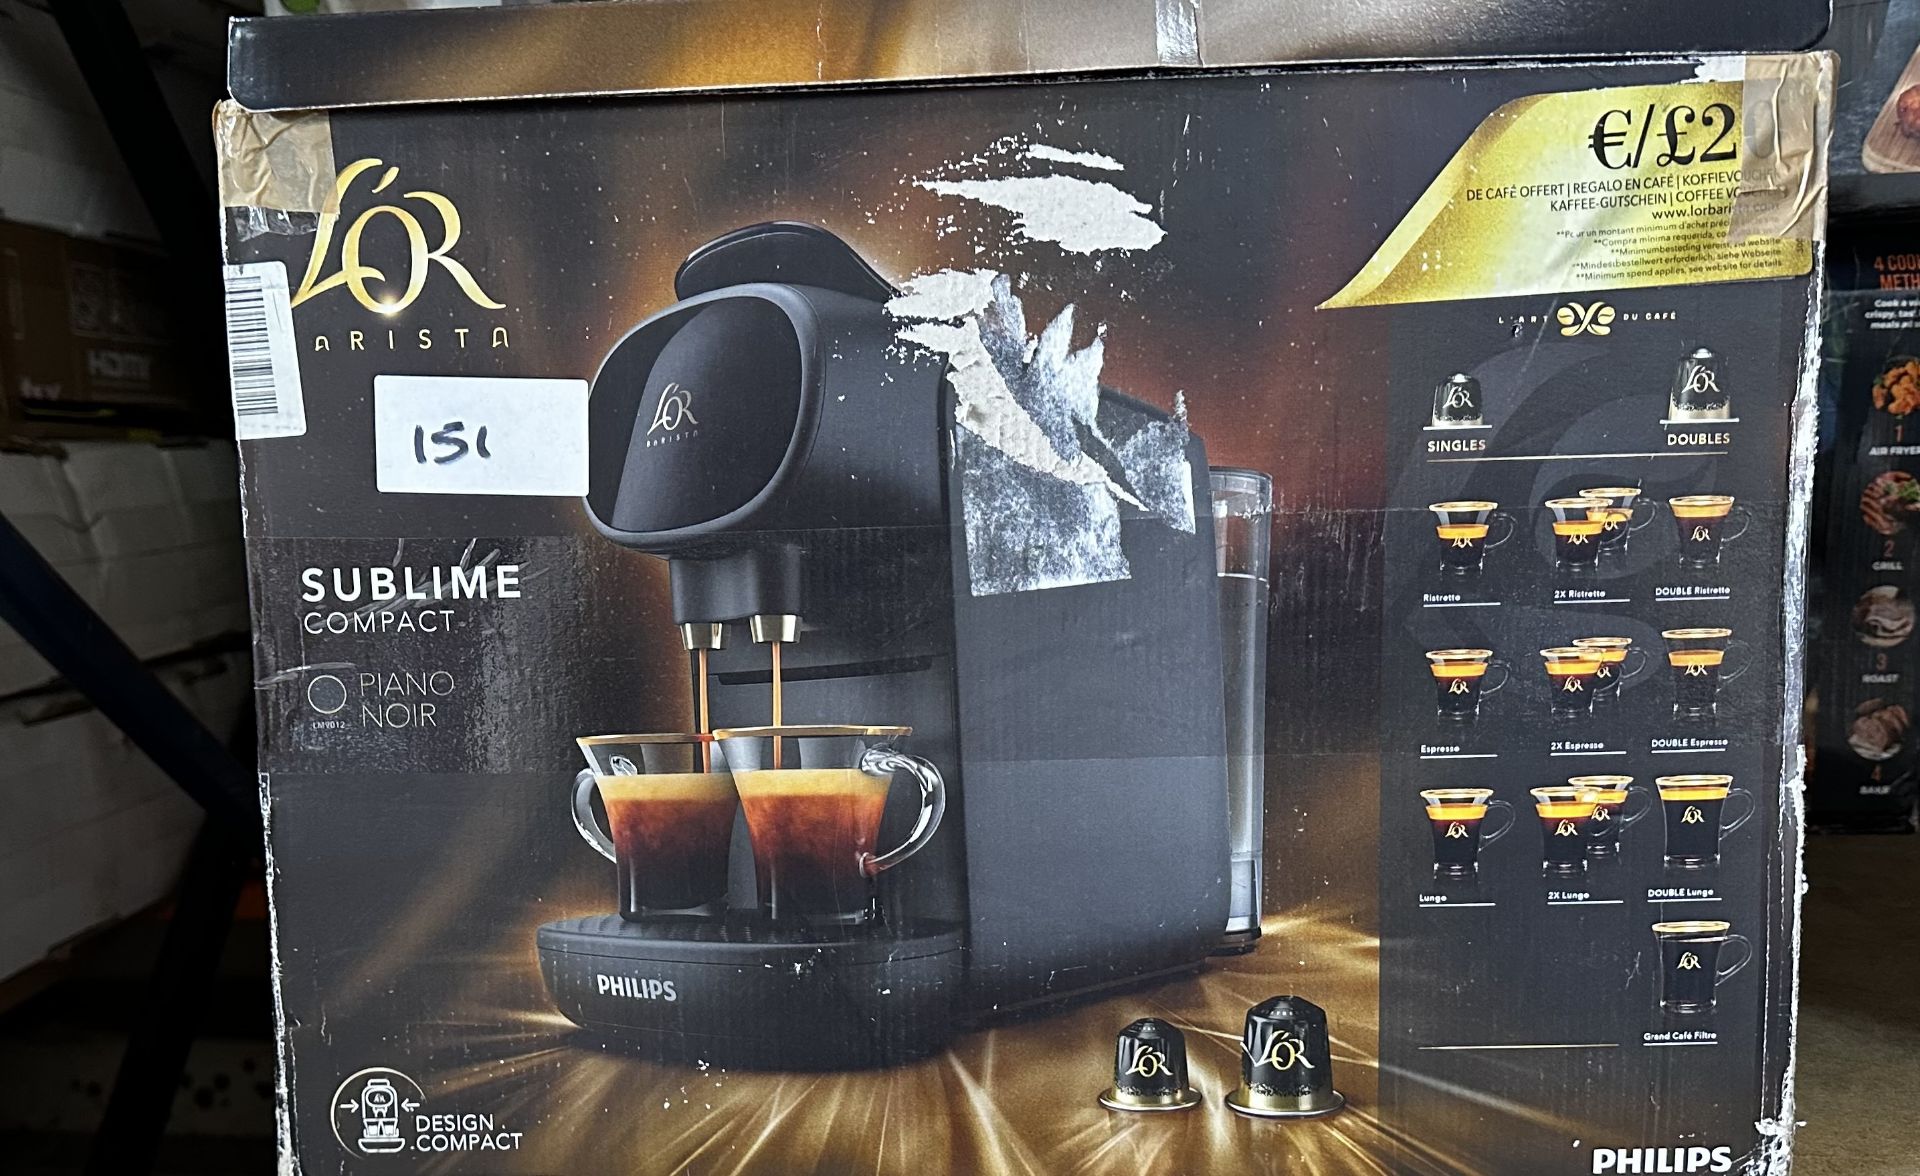 Philips LOR Arista Sublime compact coffee machine. RRP £105 - GRADE U